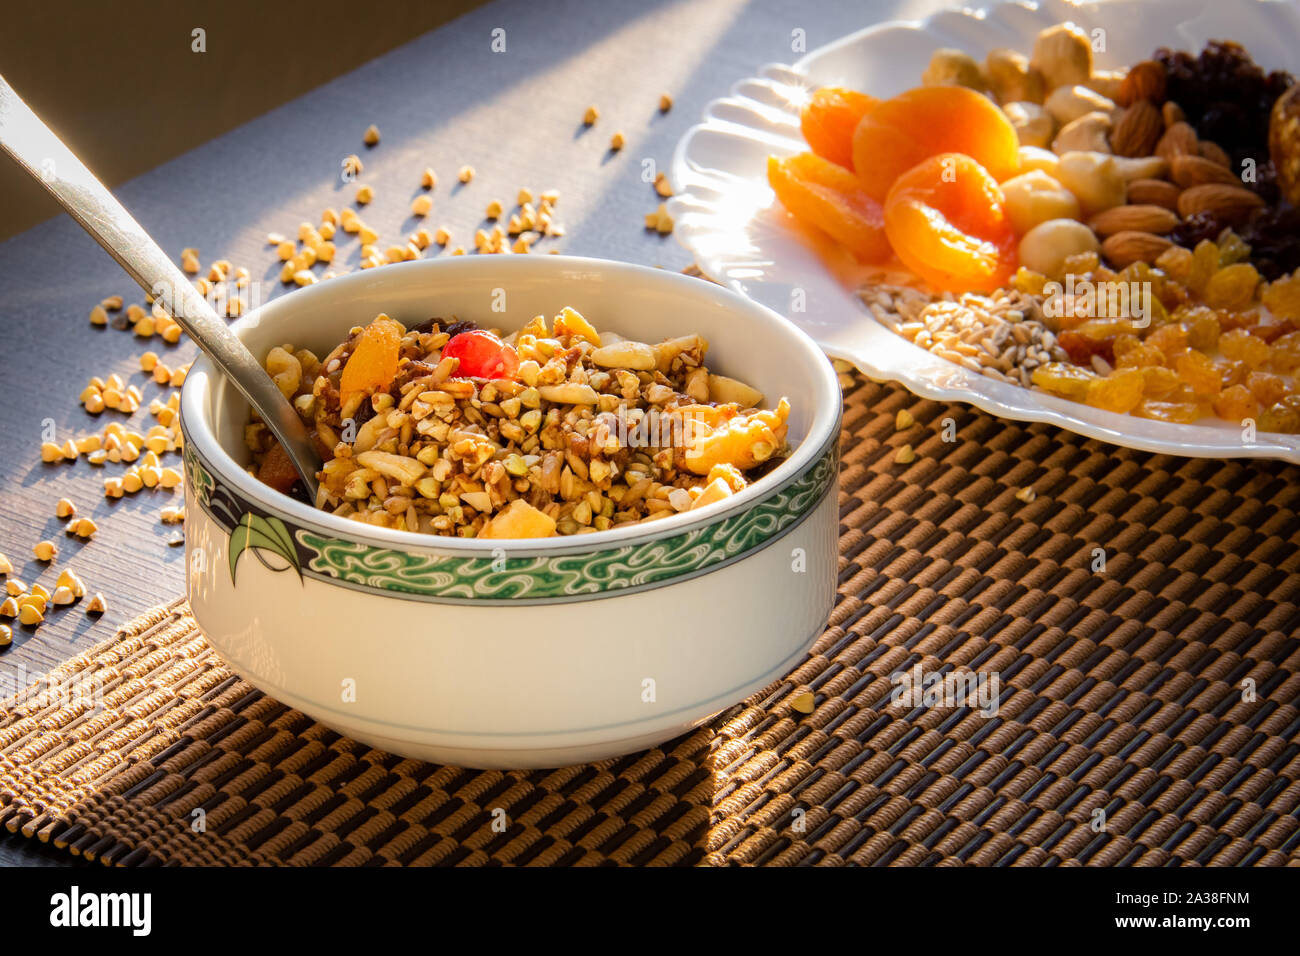 Buckwheat granola and a plate of sunflower seeds, cashews, brazil nuts, almonds, apricots and raisins Stock Photo